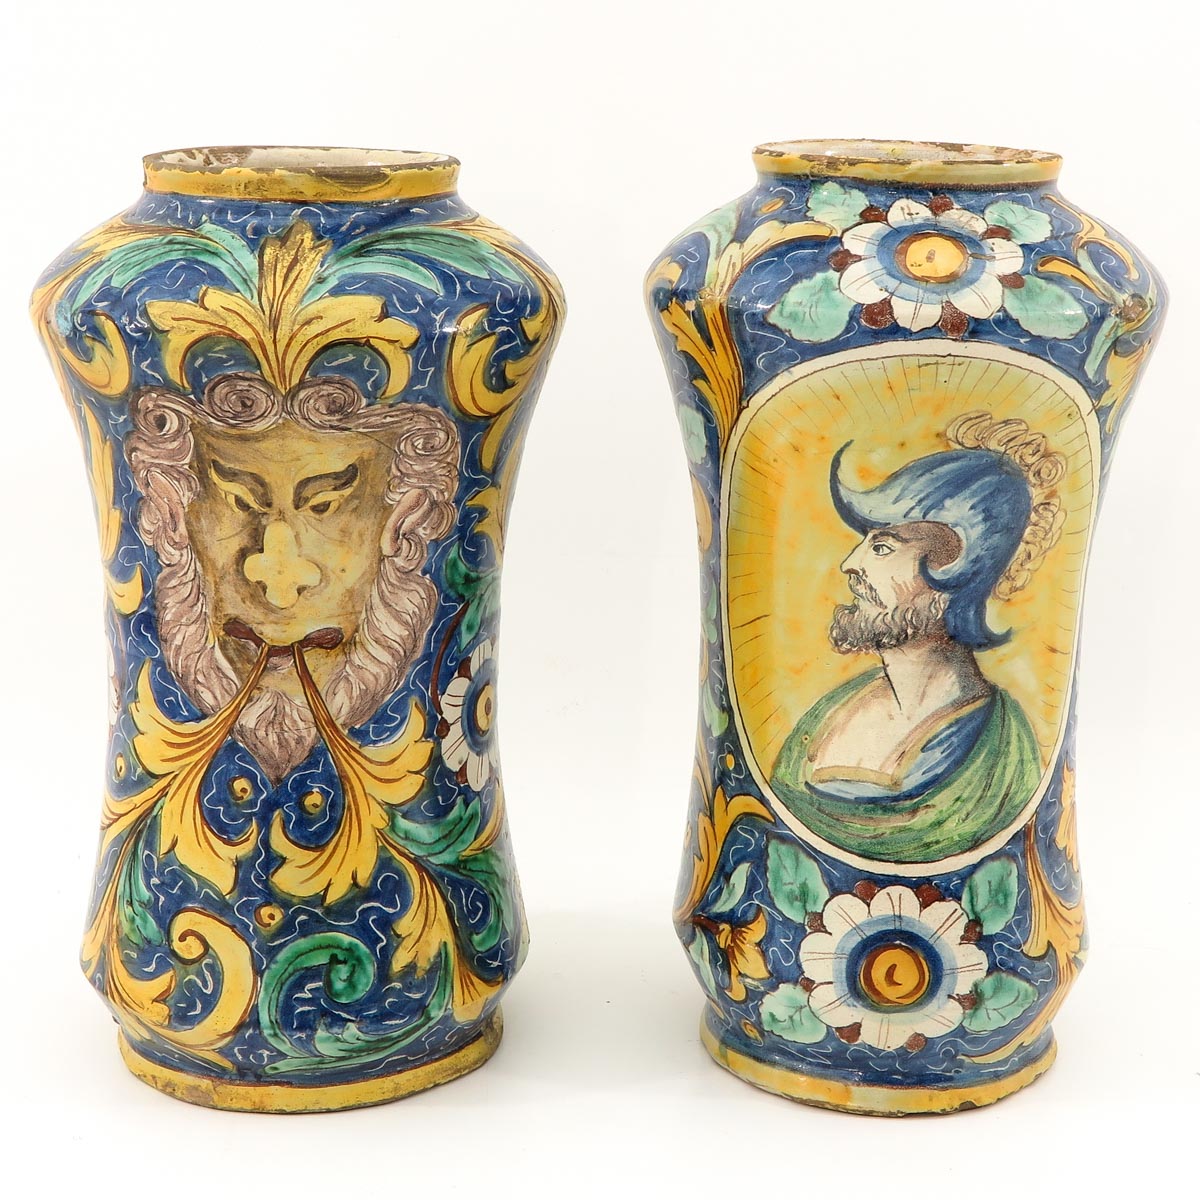 A Pair of 17th Century Italian Apothecary Jars